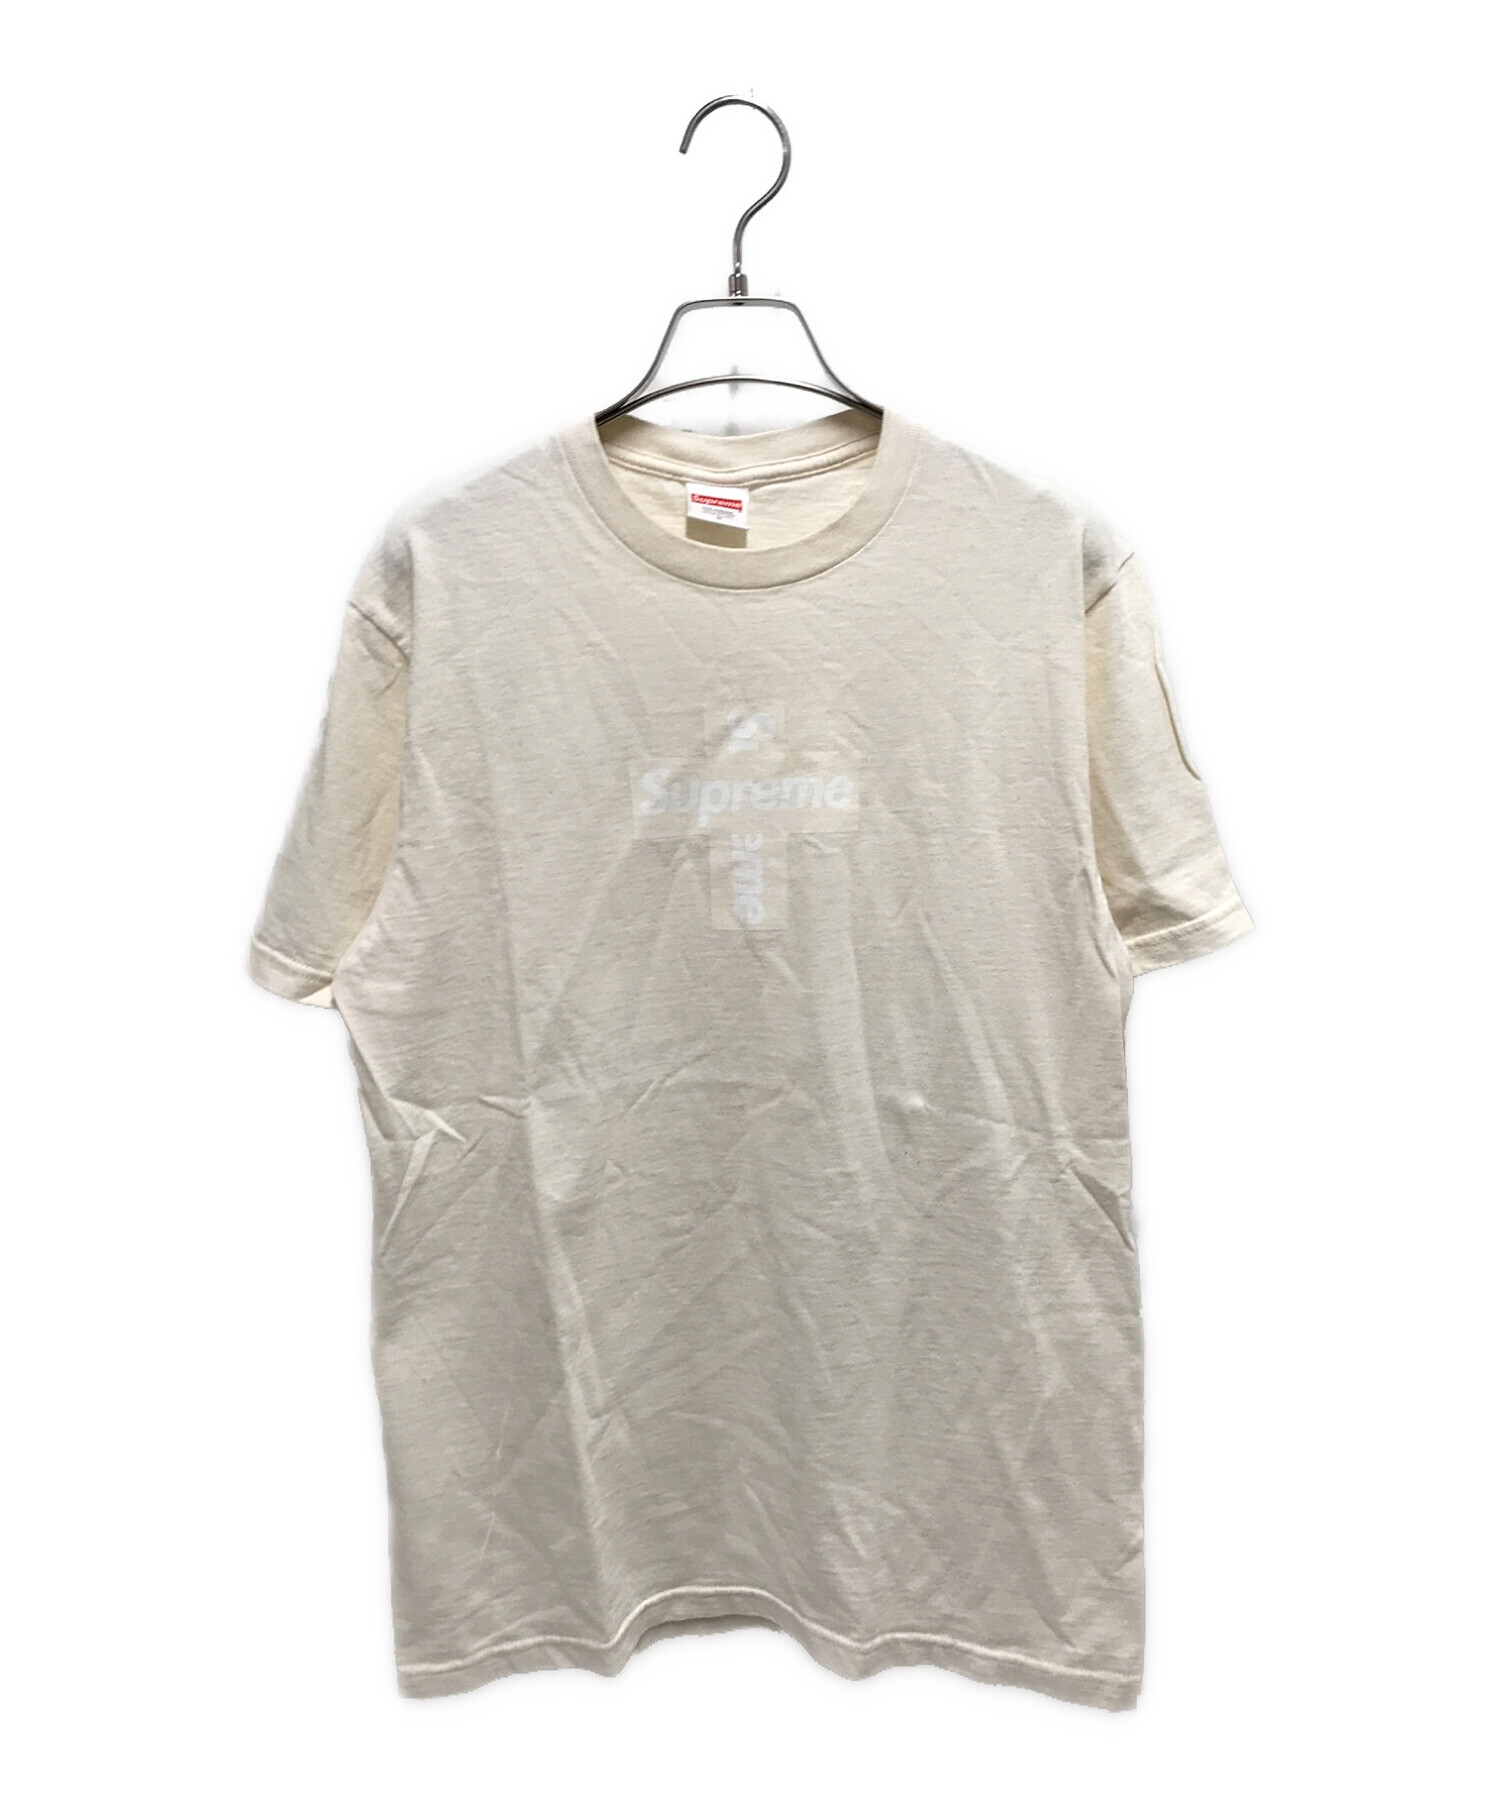 SUPREME (シュプリーム) クロスボックスロゴTシャツ / Cross Box Tee アイボリー サイズ:S